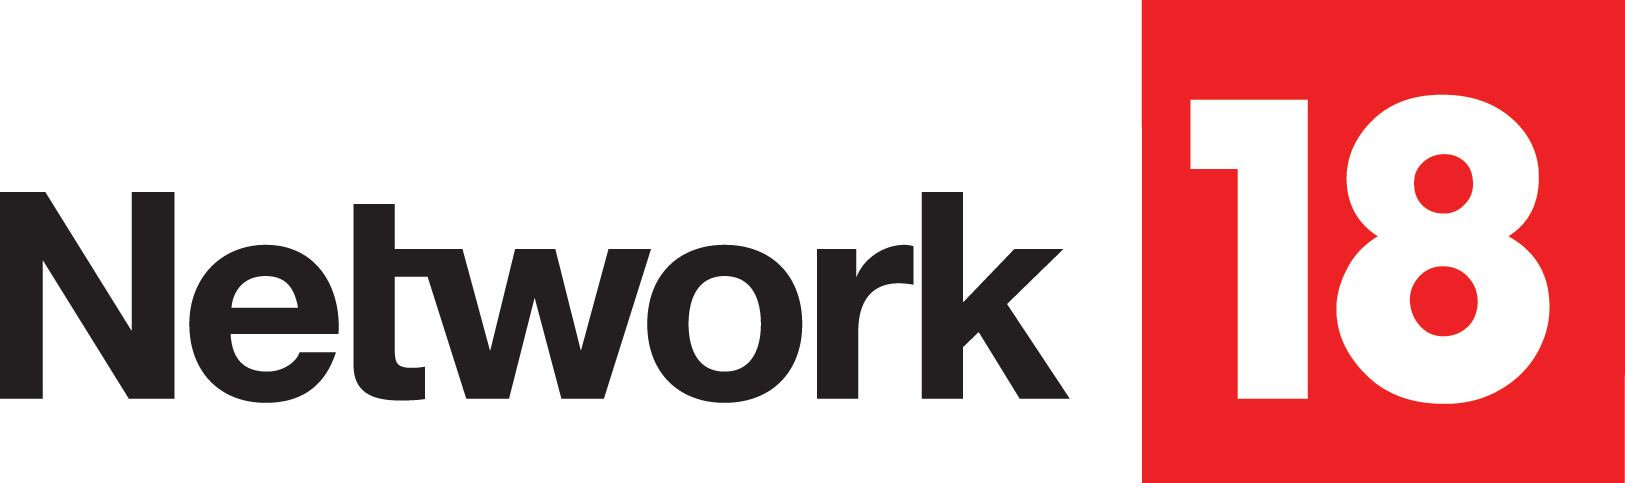 Network 18 Logo